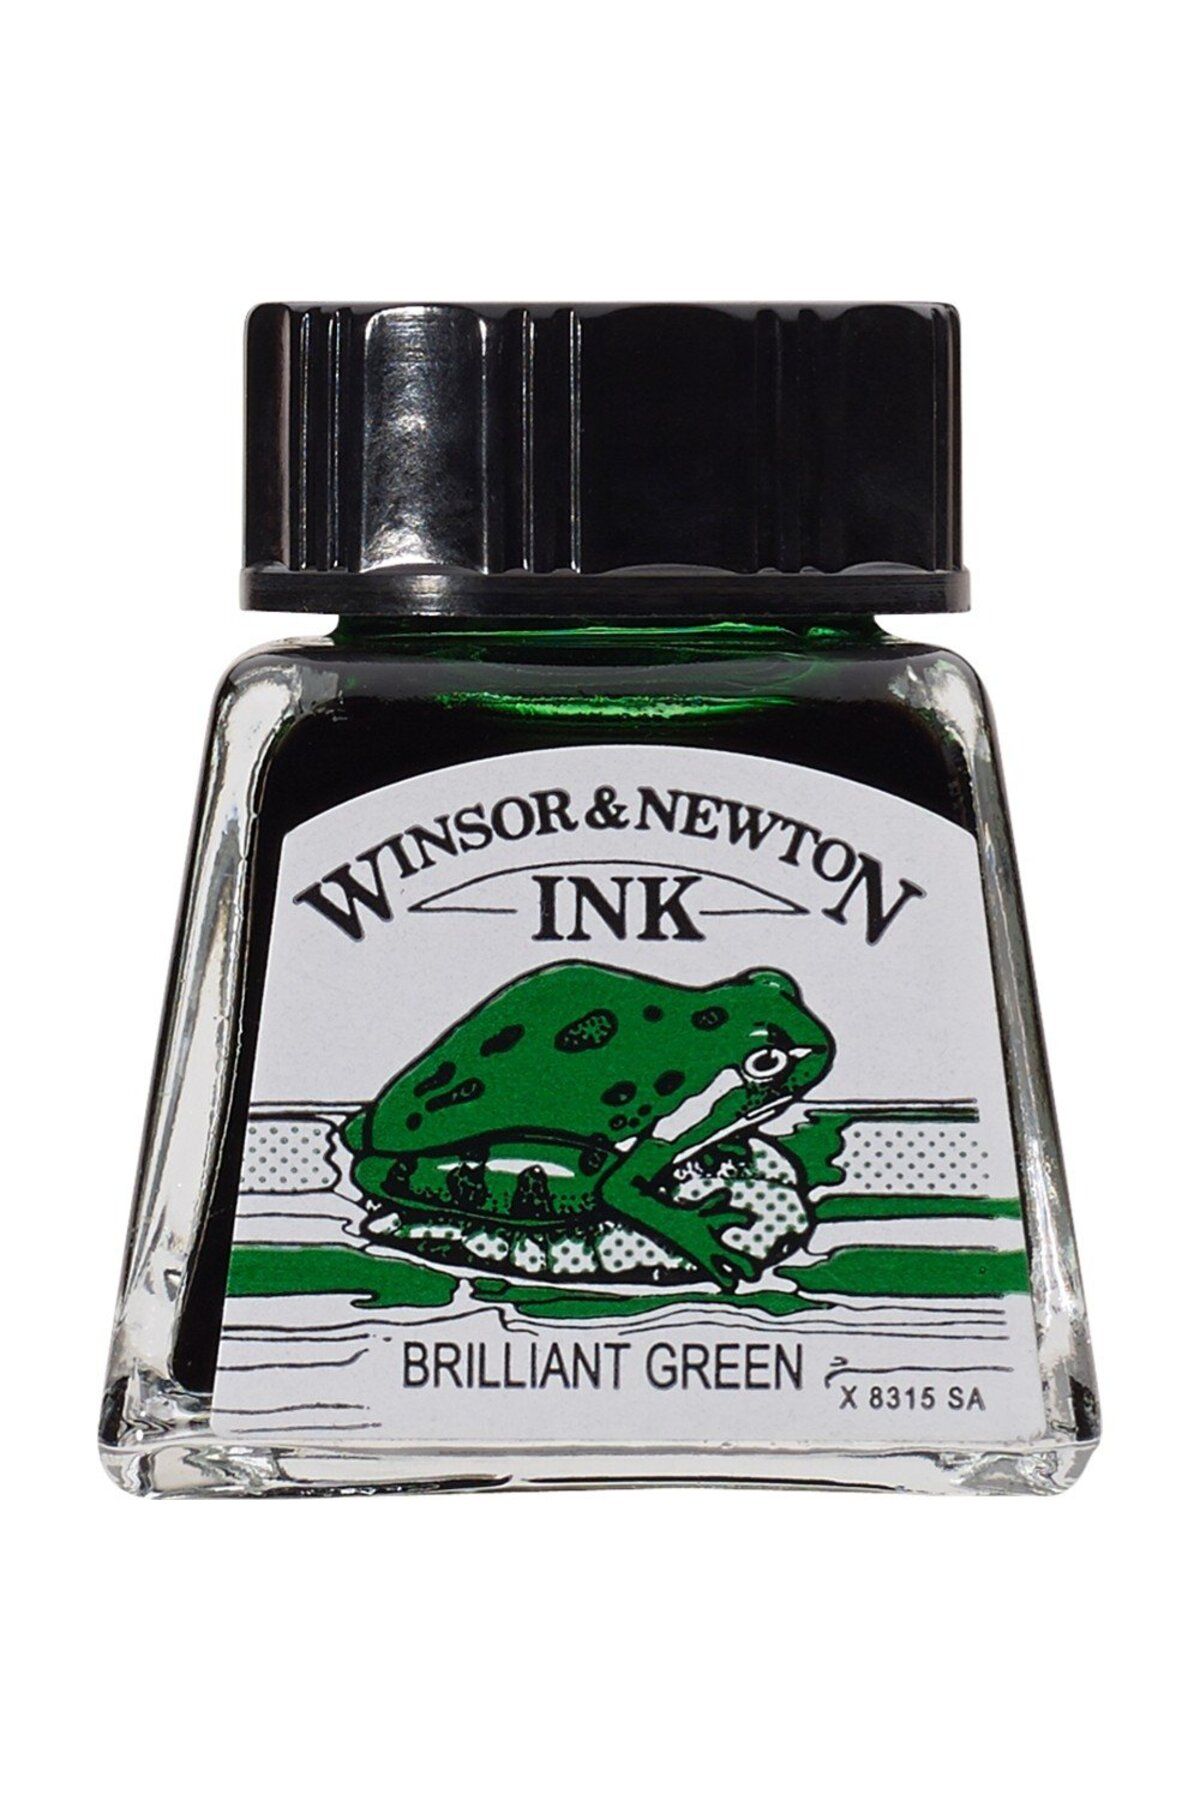 Winsor Newton Drawing Ink Çini Mürekkebi 14ml 046 Brilliant Green